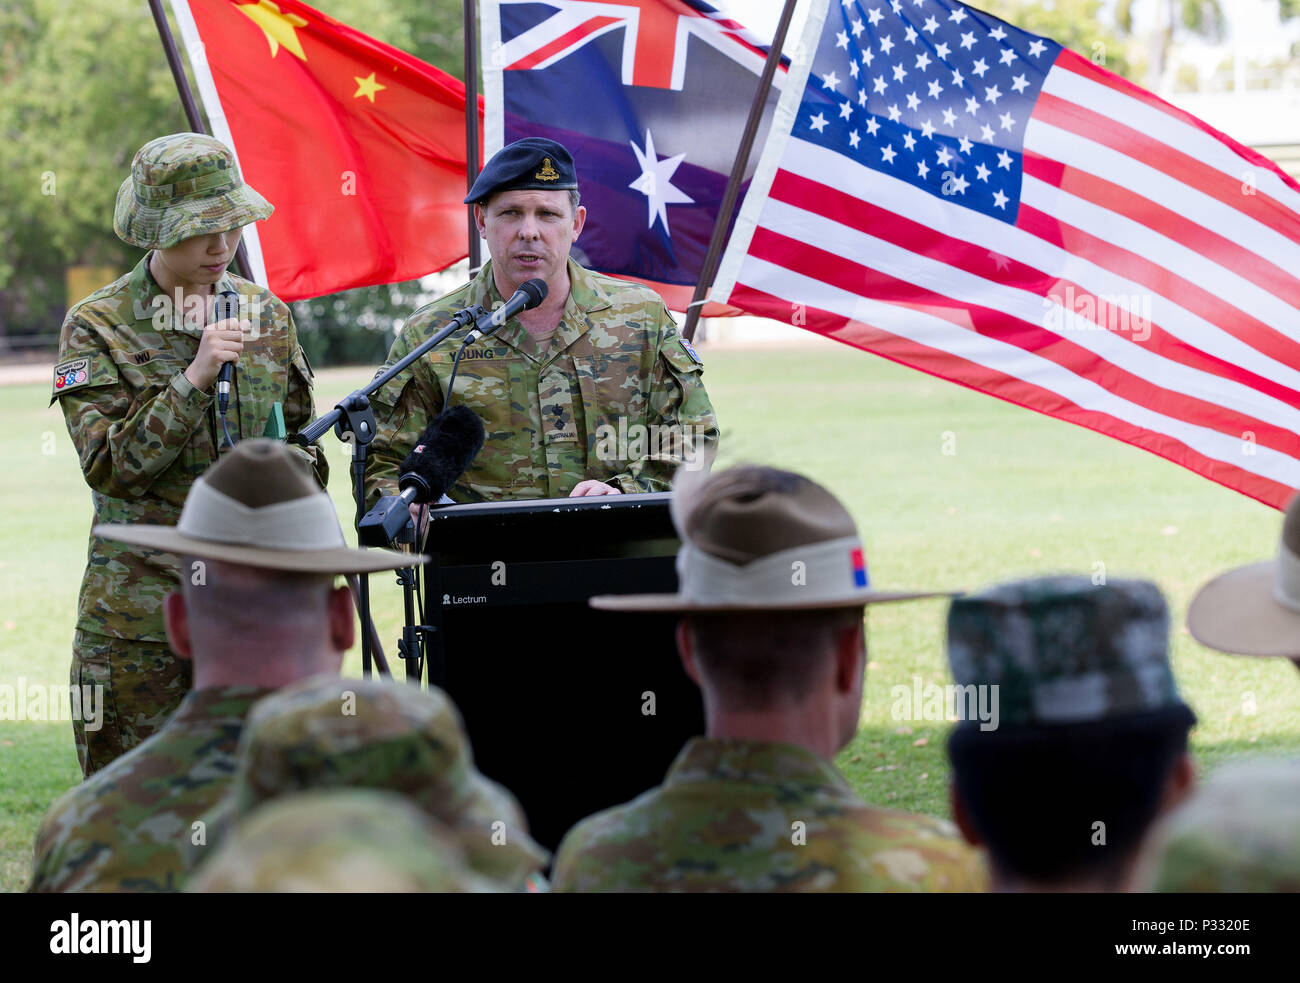 Australian Army Lieutenant Warwick Young addresses Australian Army, US Army, US Marine Corps and Chinese People's Liberation Army personnel the Kowari opening ceremony at Larrakeyah Barracks in Darwin,